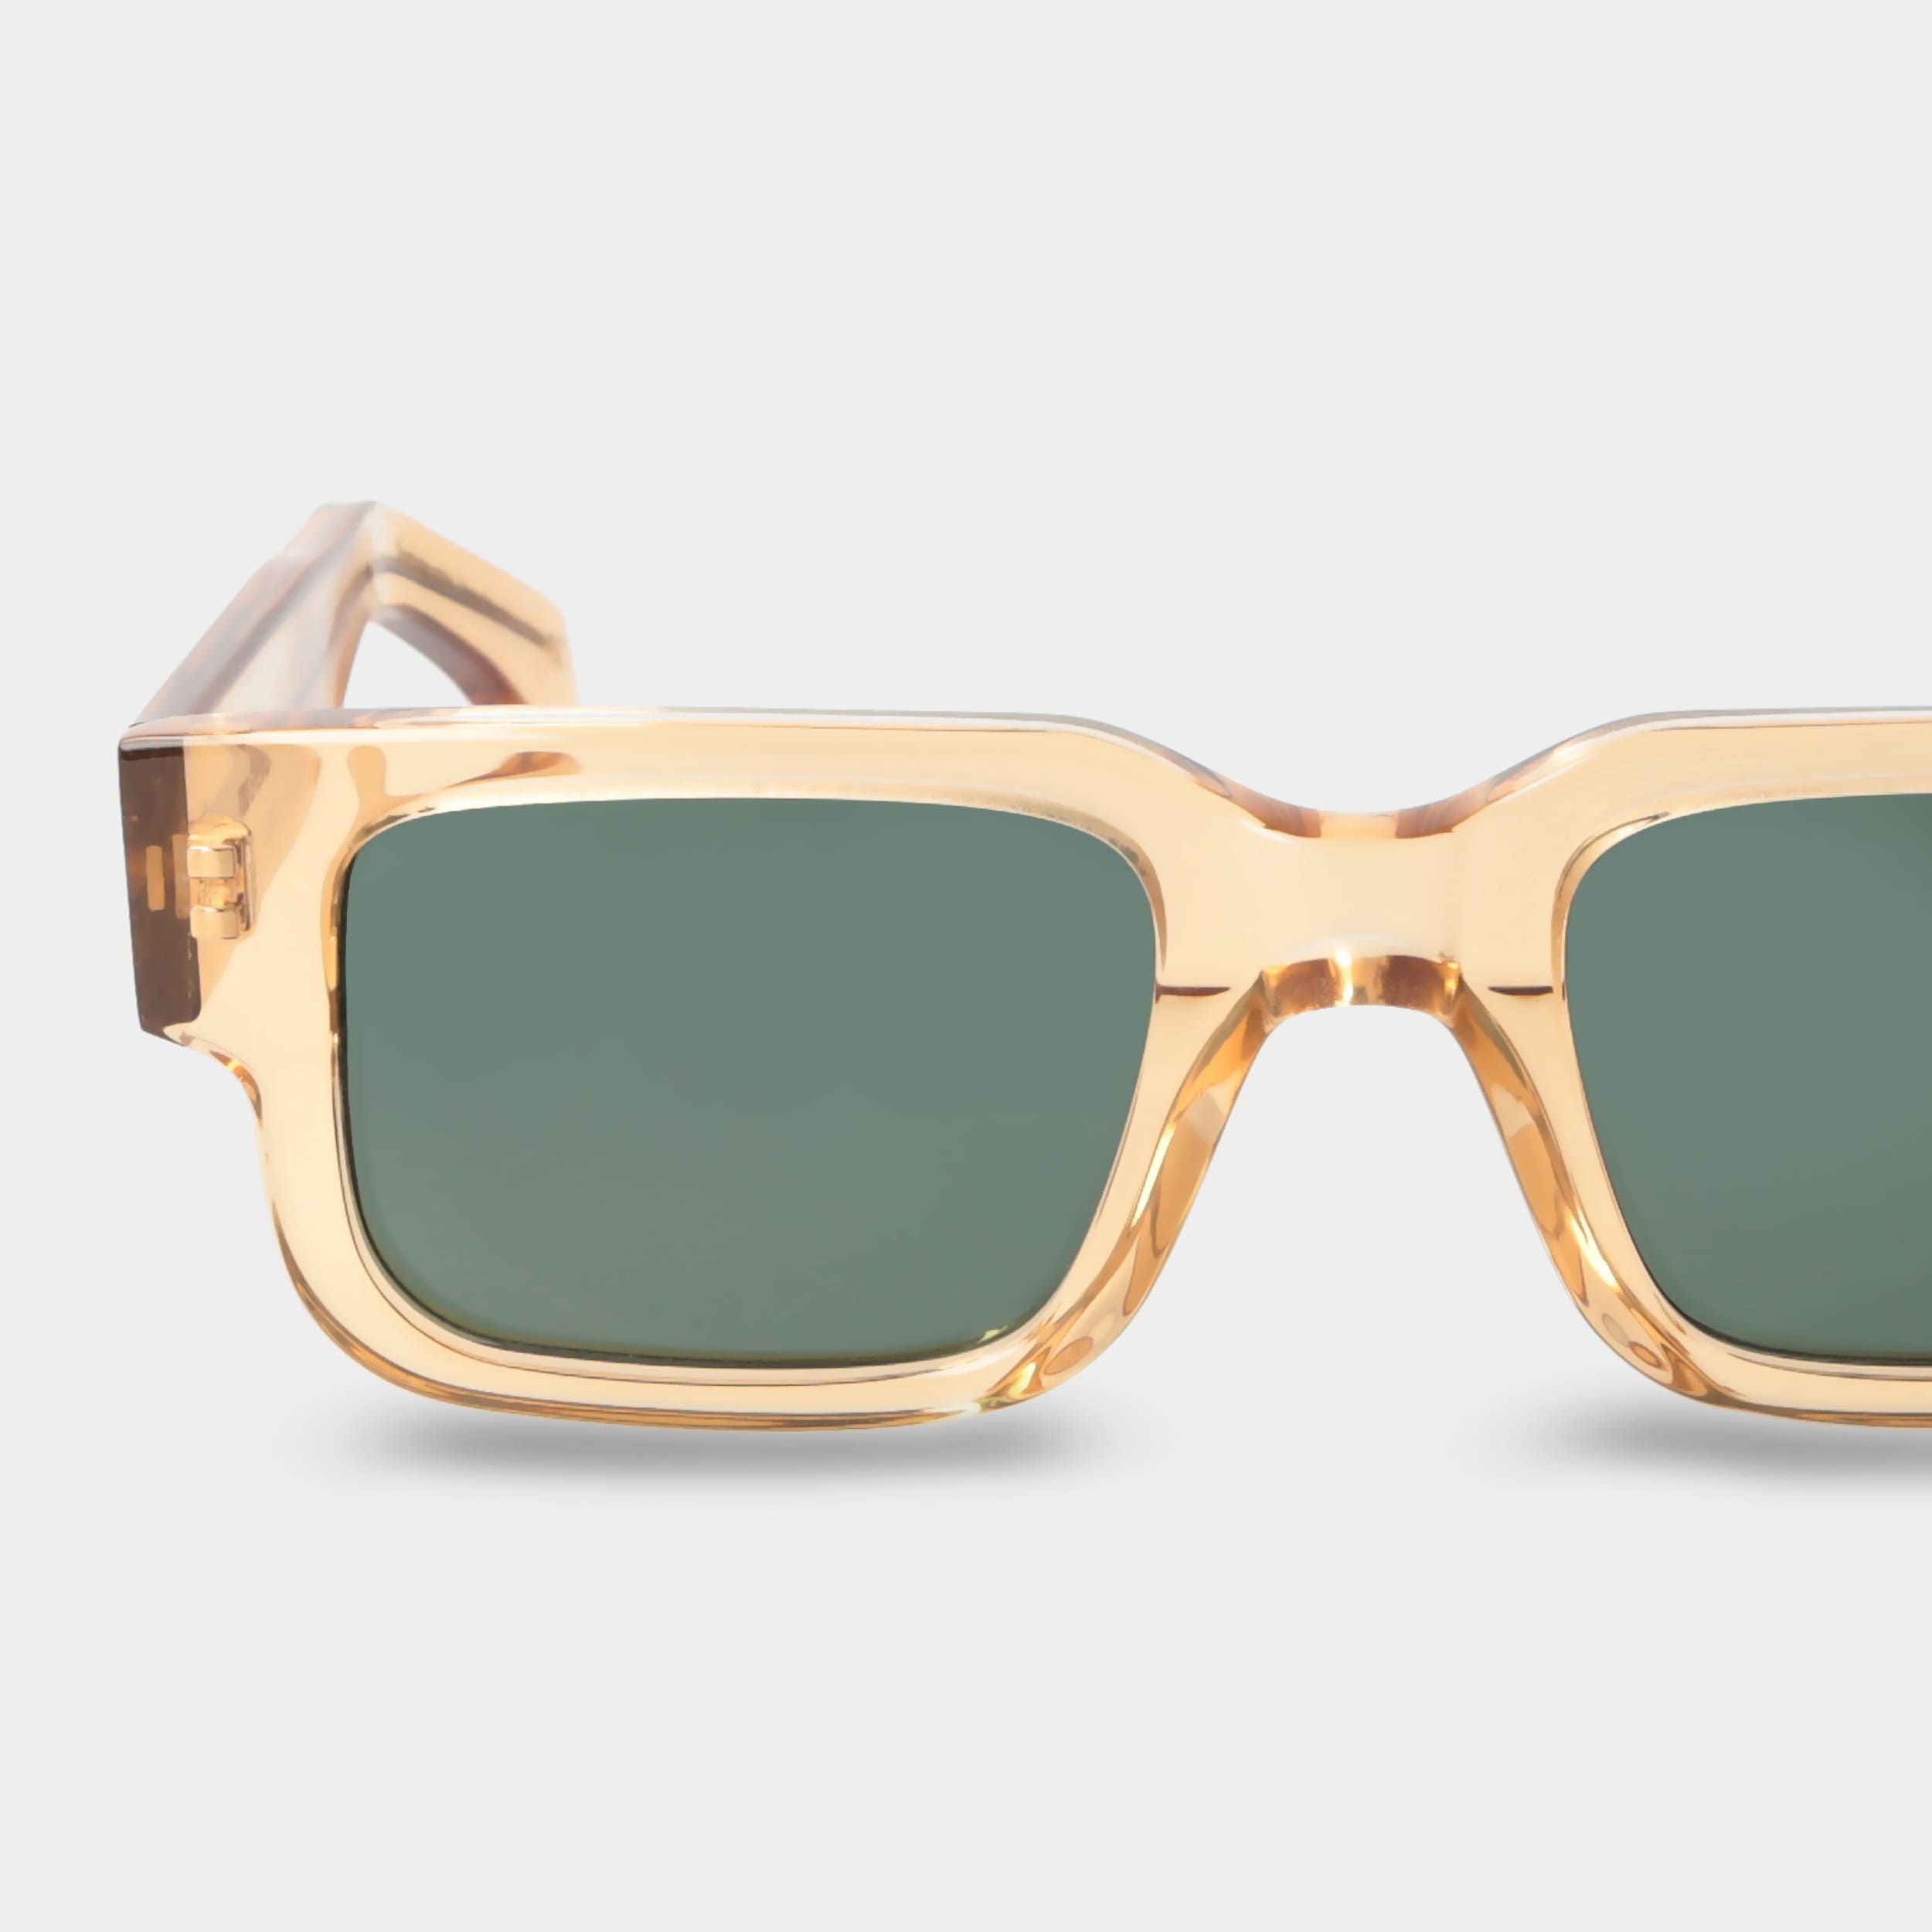 sunglasses-silk-eco-champagne-bottle-green-sustainable-tbd-eyewear-lens